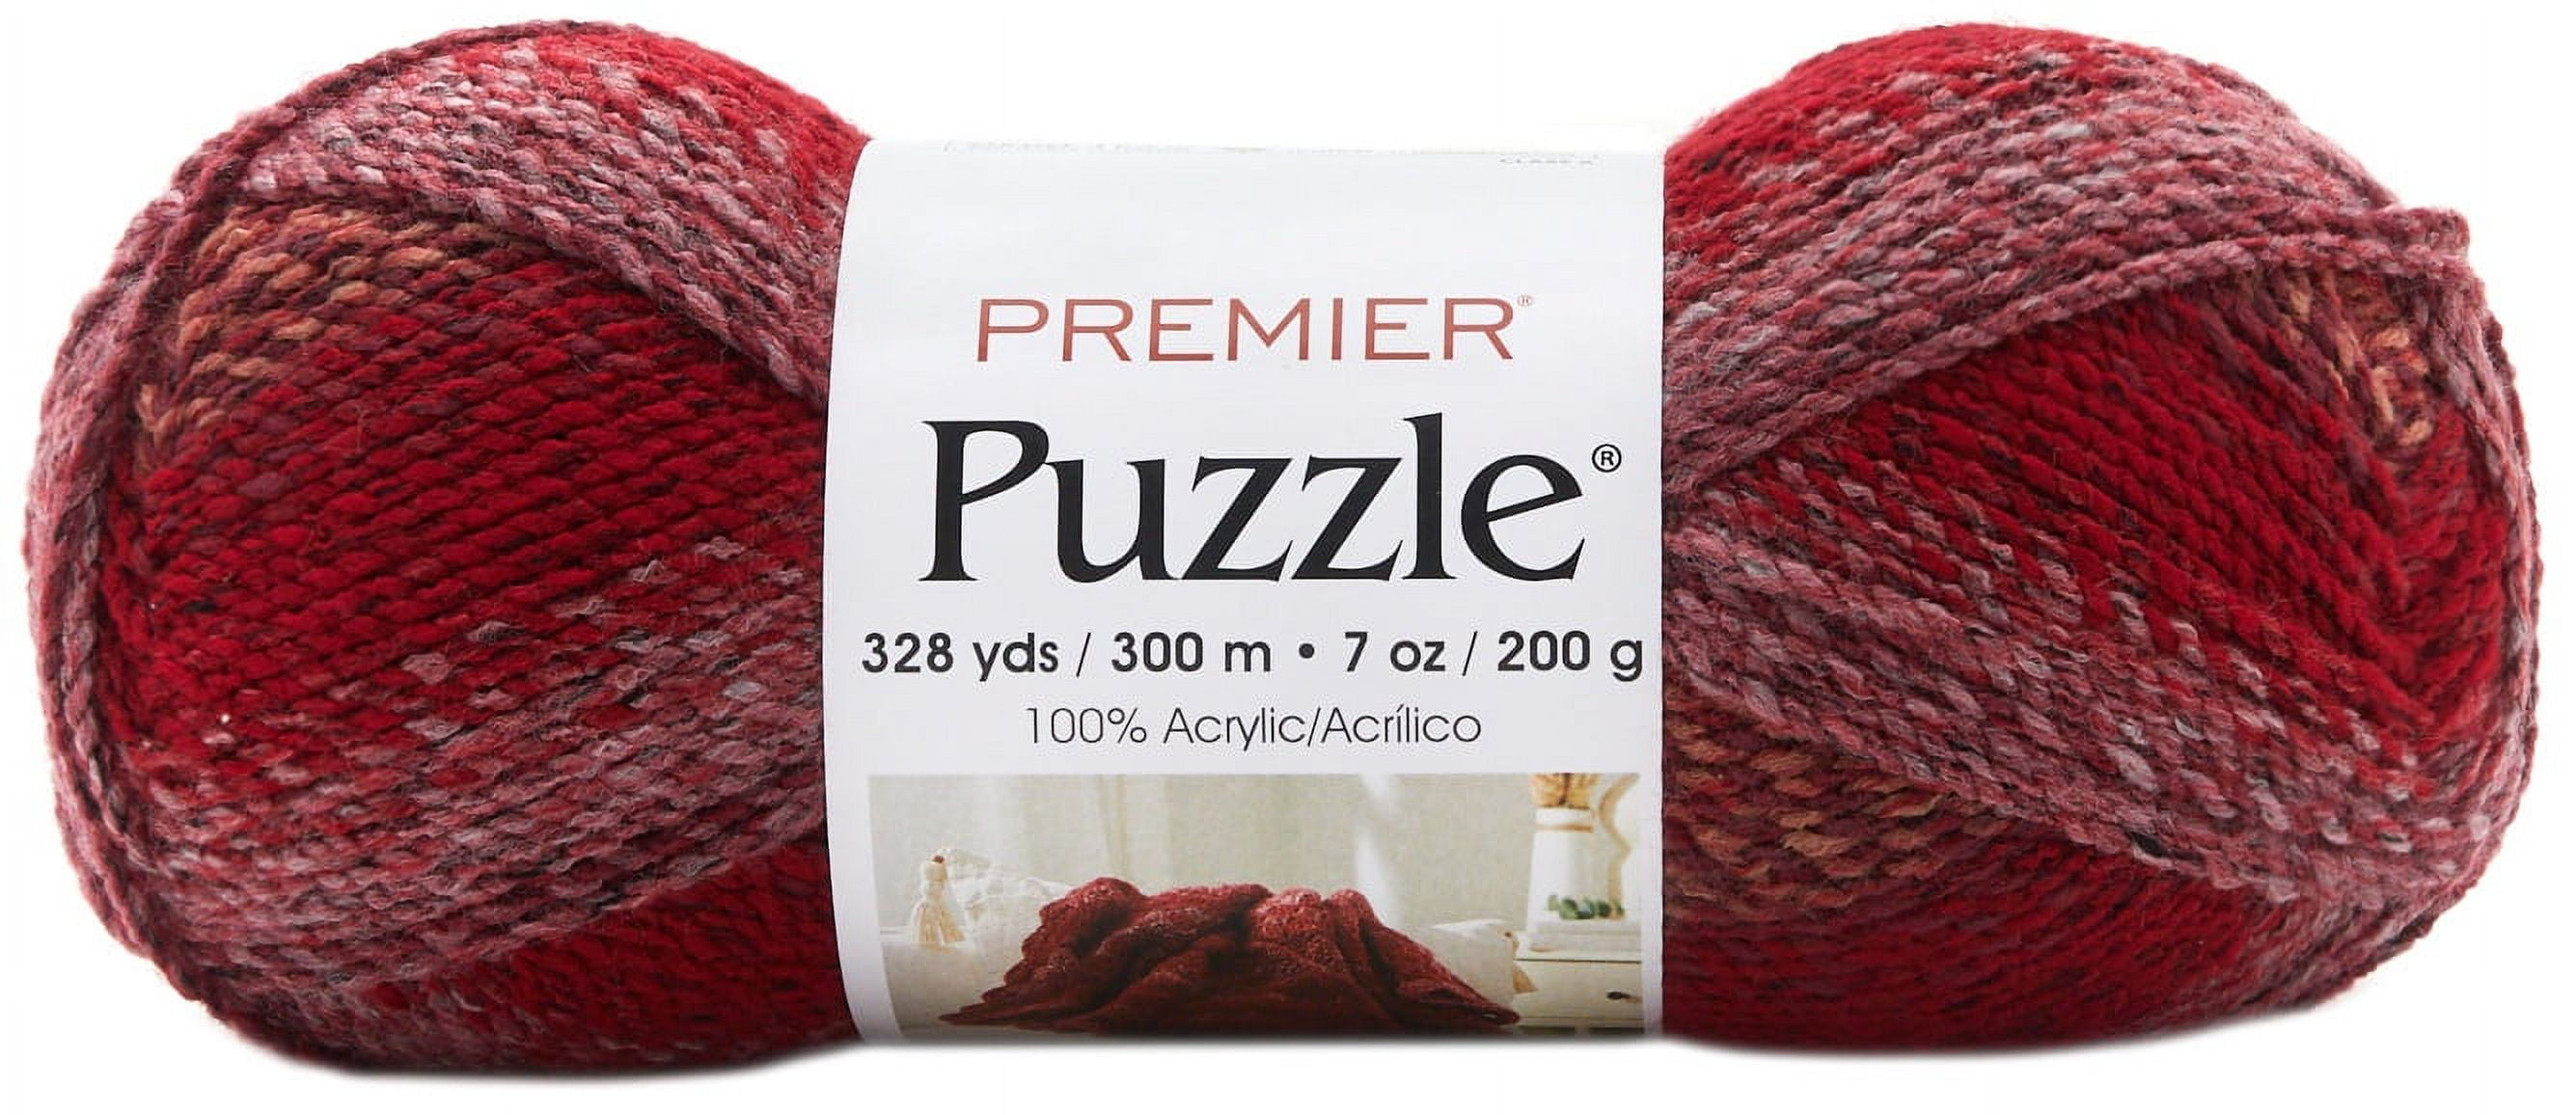 Premier Puzzle Yarn - NOTM671125